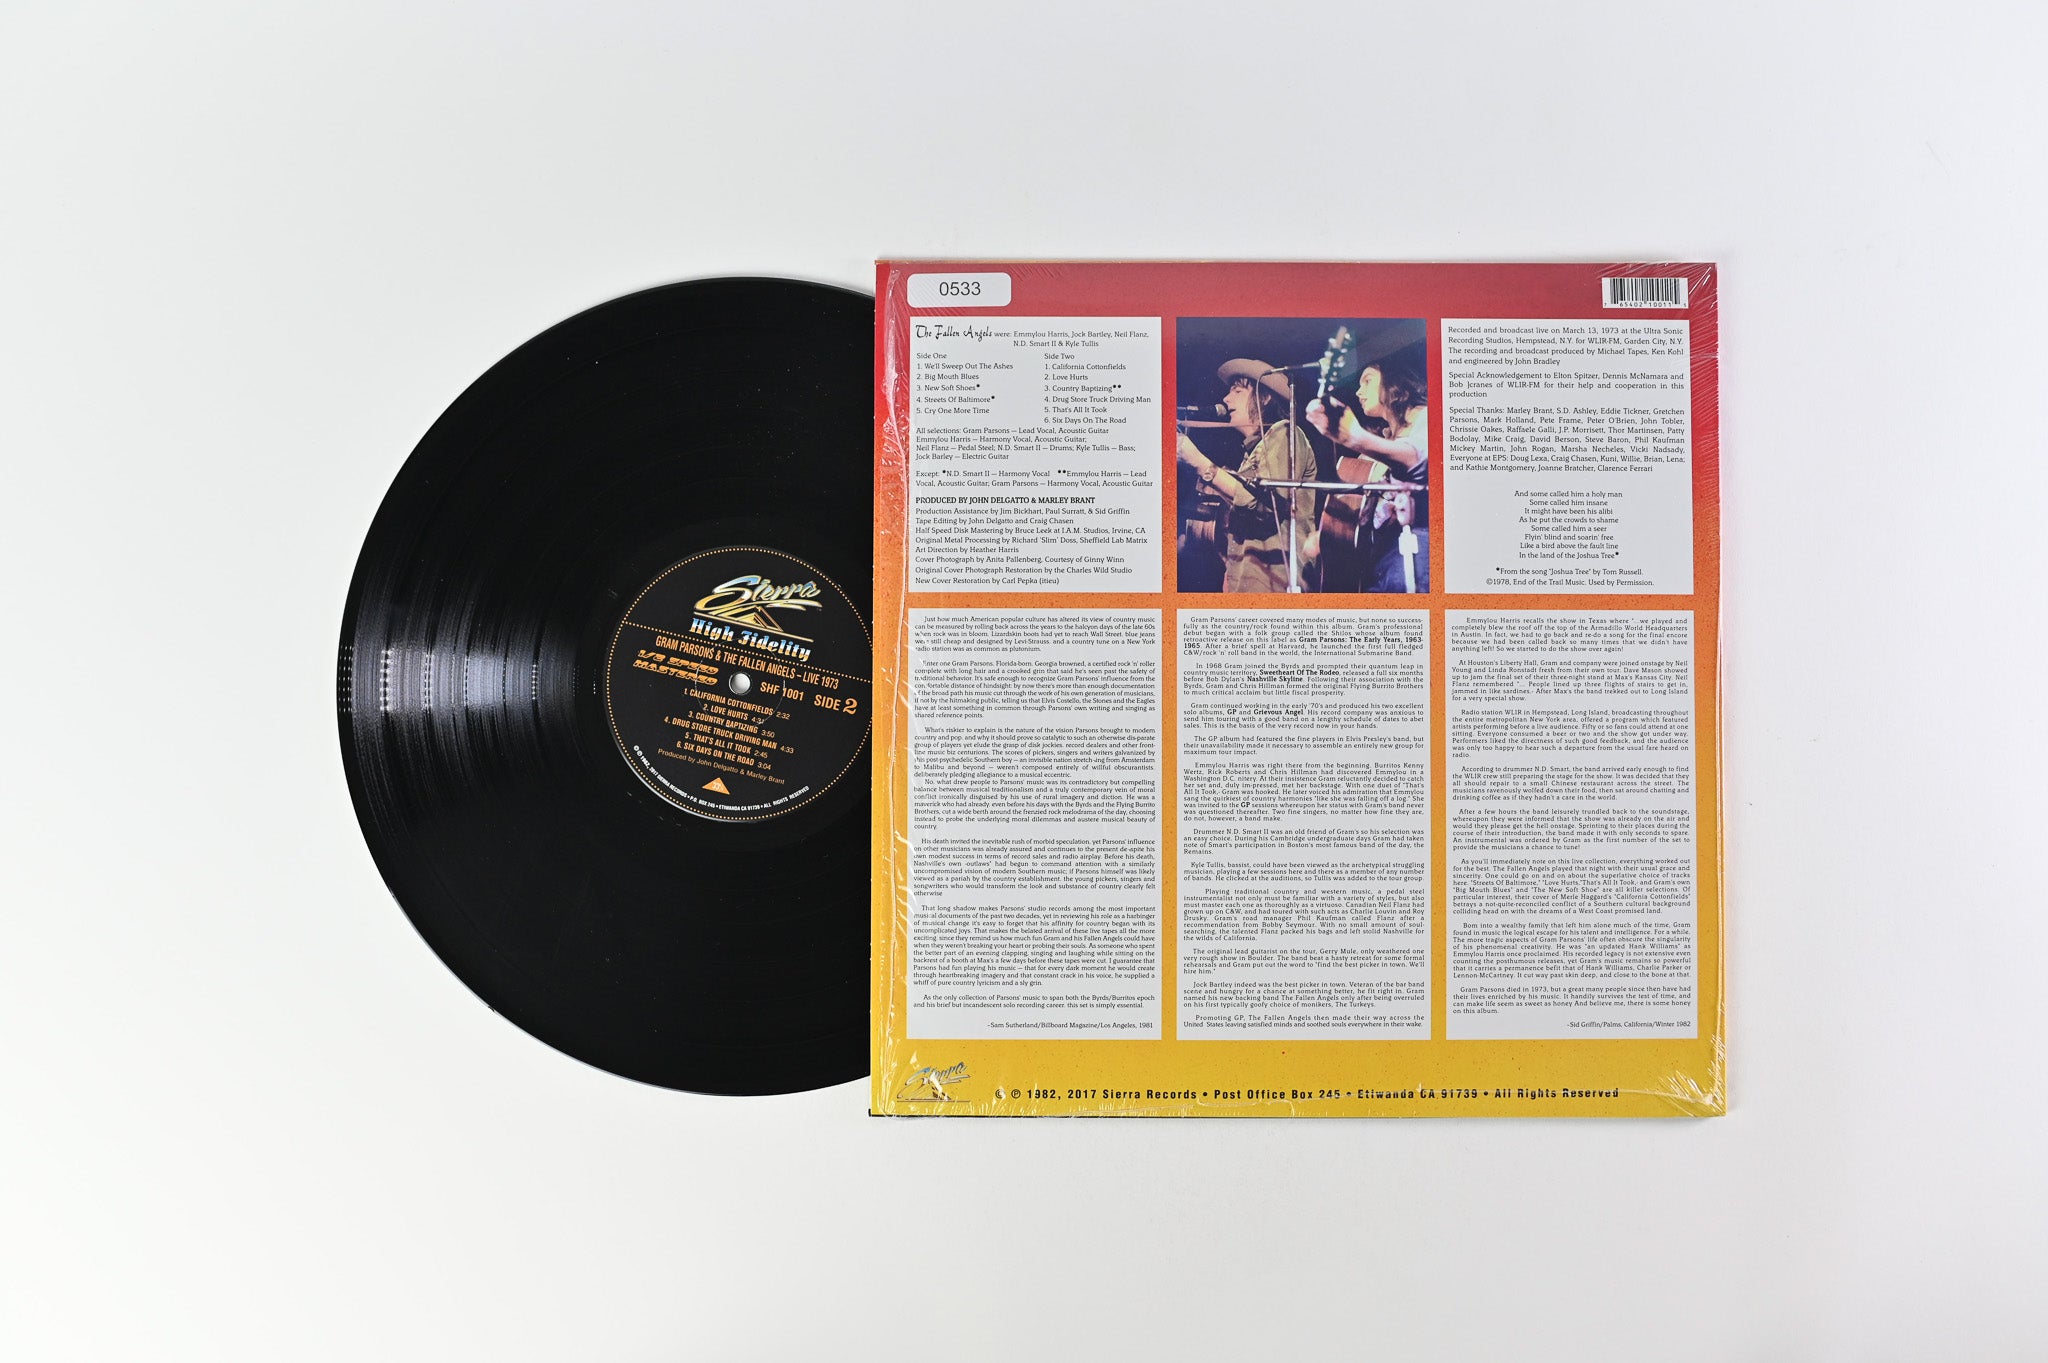 Gram Parsons & The Fallen Angels - Live 1973 on Sierra RSD Black Friday 2017 Ltd Numbered Reissue